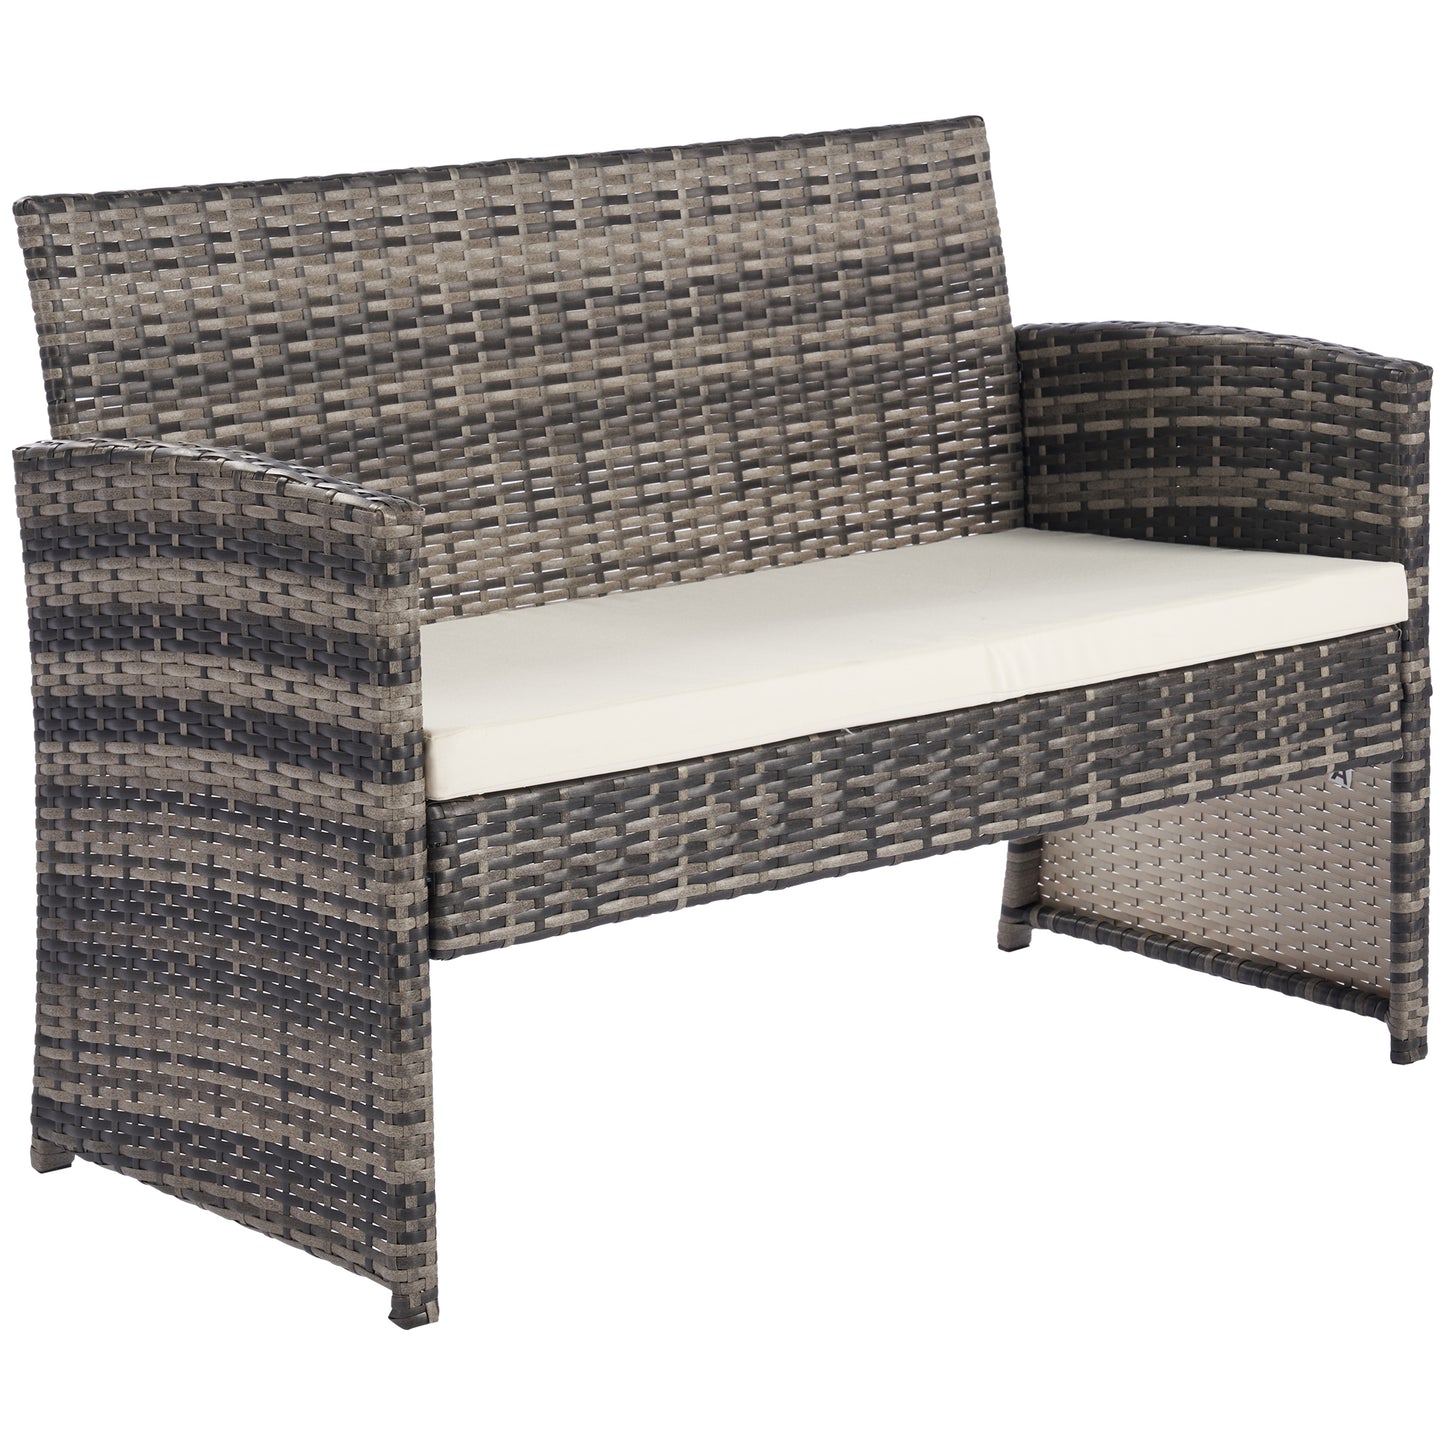 Outdoor Rattan Furniture Sofa And Table Set  4 pcs set Gray+beige